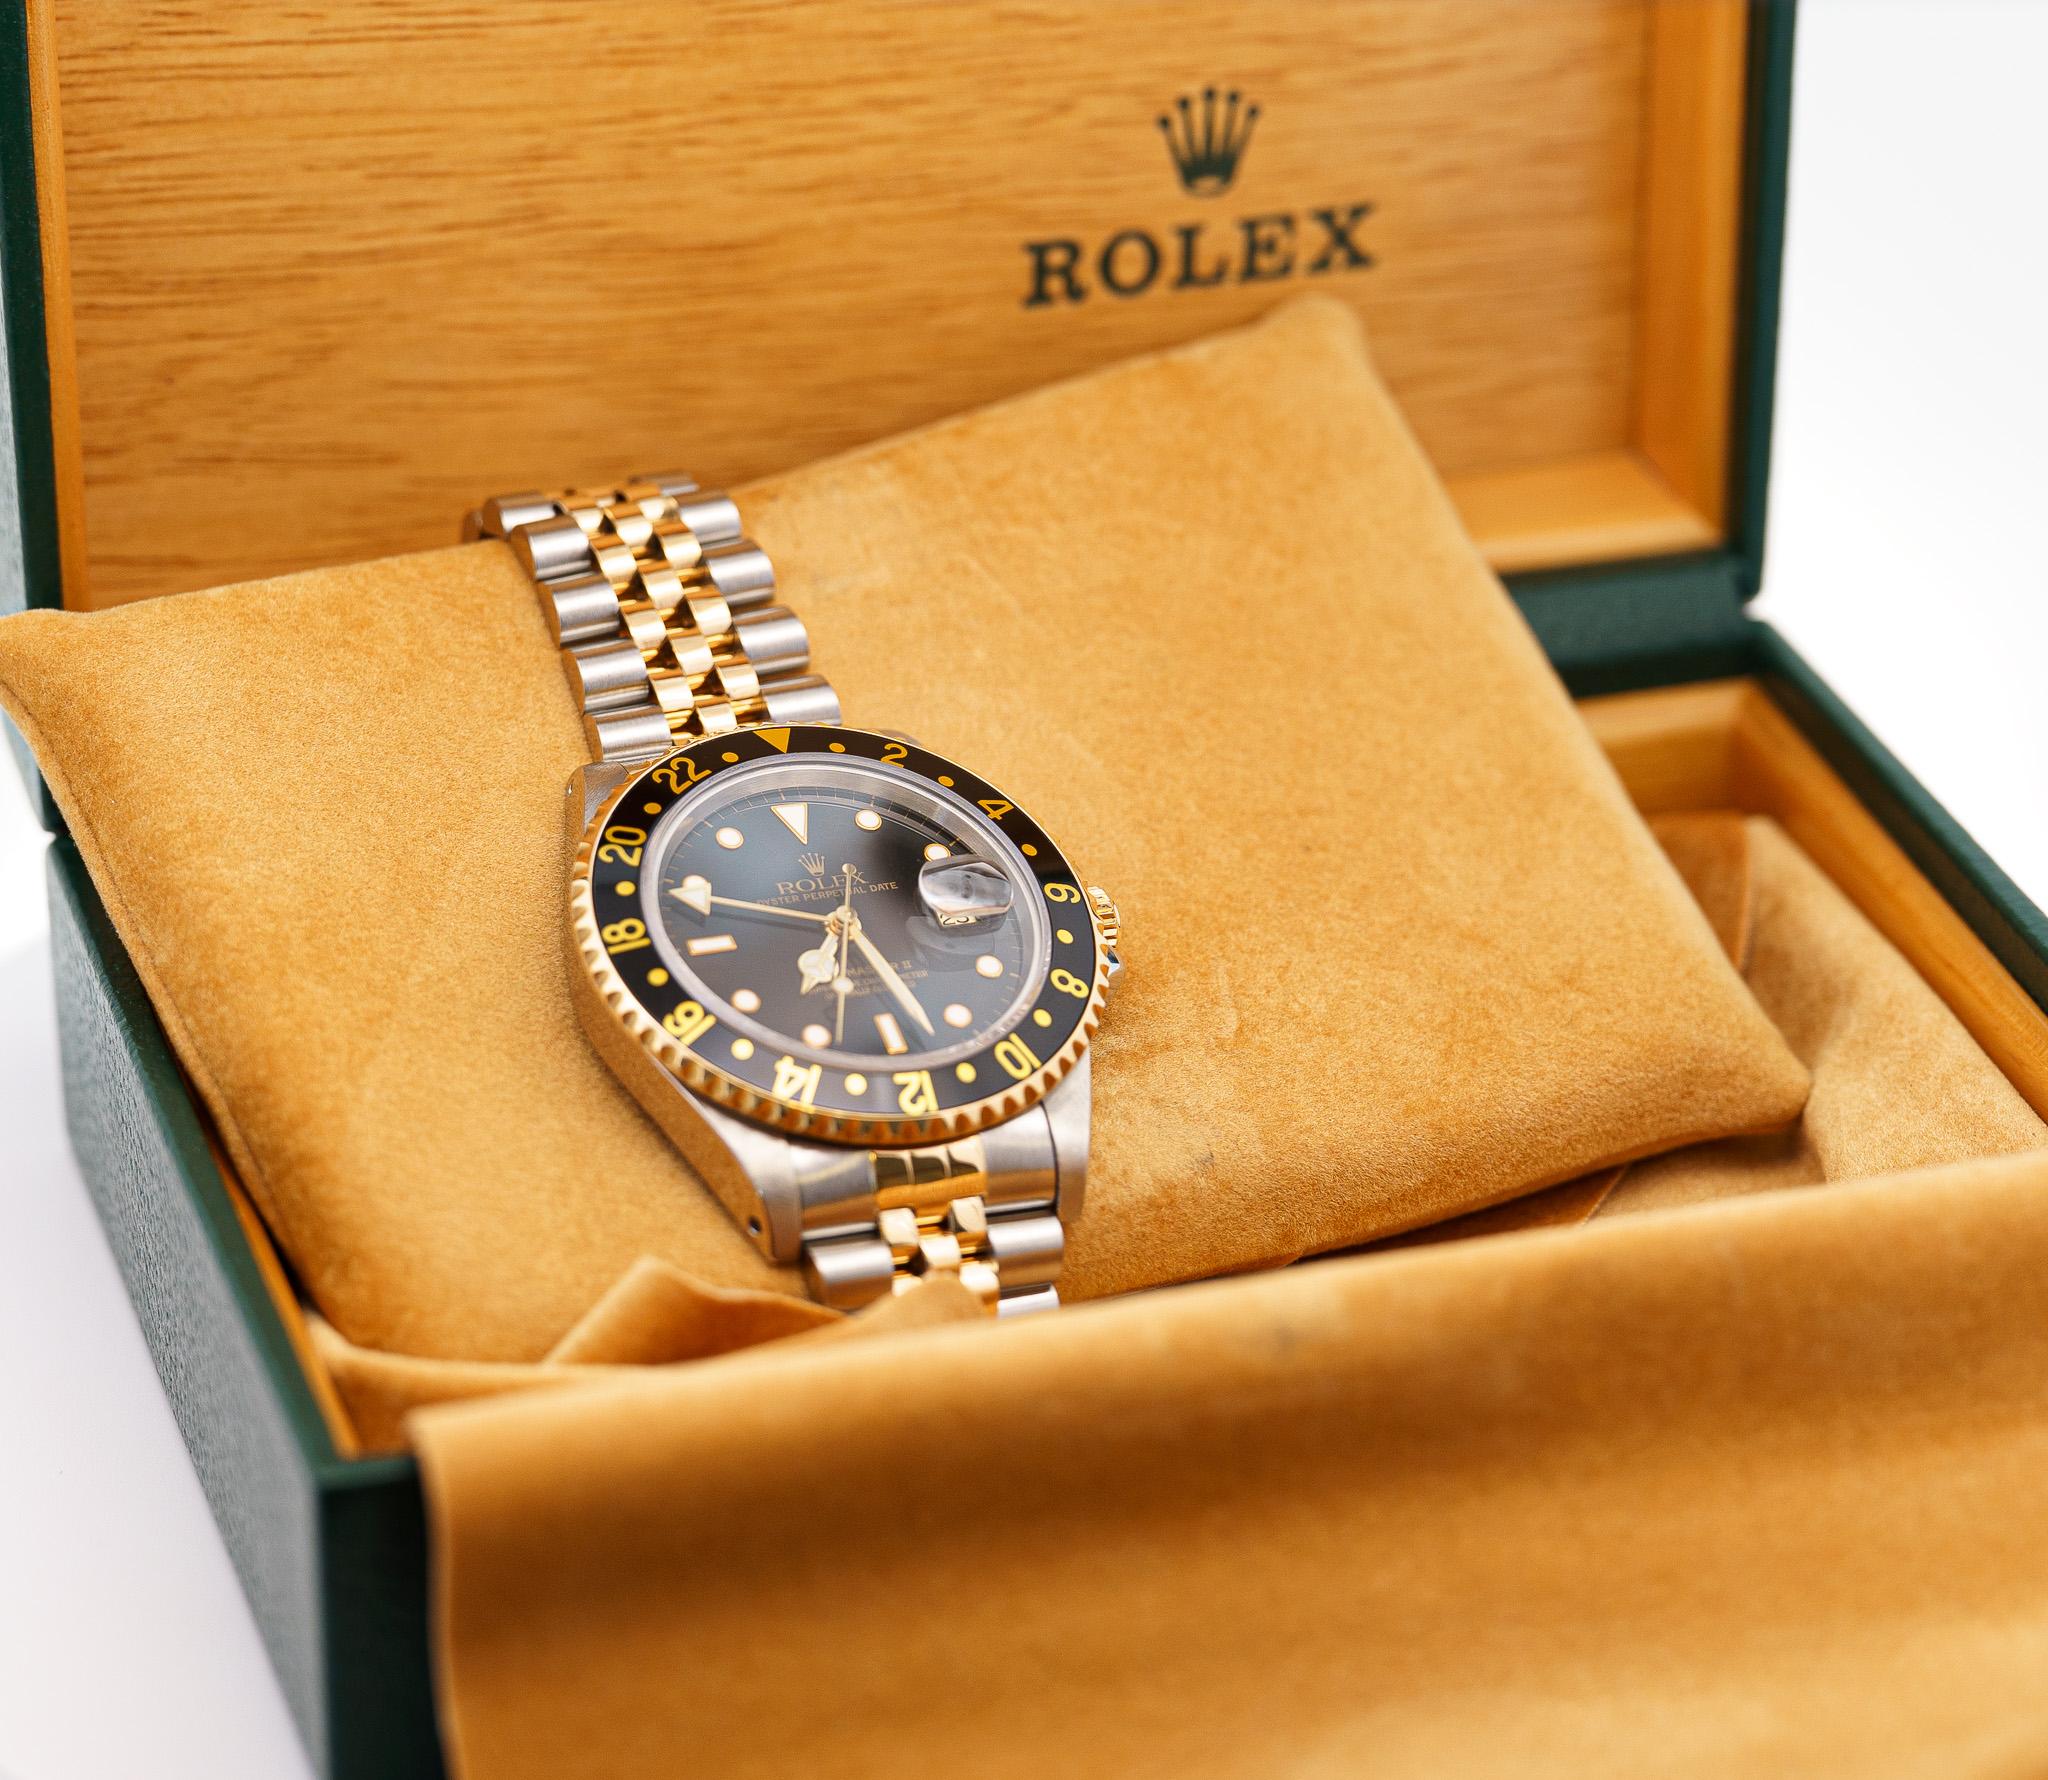 Vintage-Rolex-GMT-II-Two-Tone-Jubilee-Ref-16713-Watch-40mm-Full-Set-Box-Papers-6_54586694-cbdd-4aab-939b-a5ed44f89593.jpg